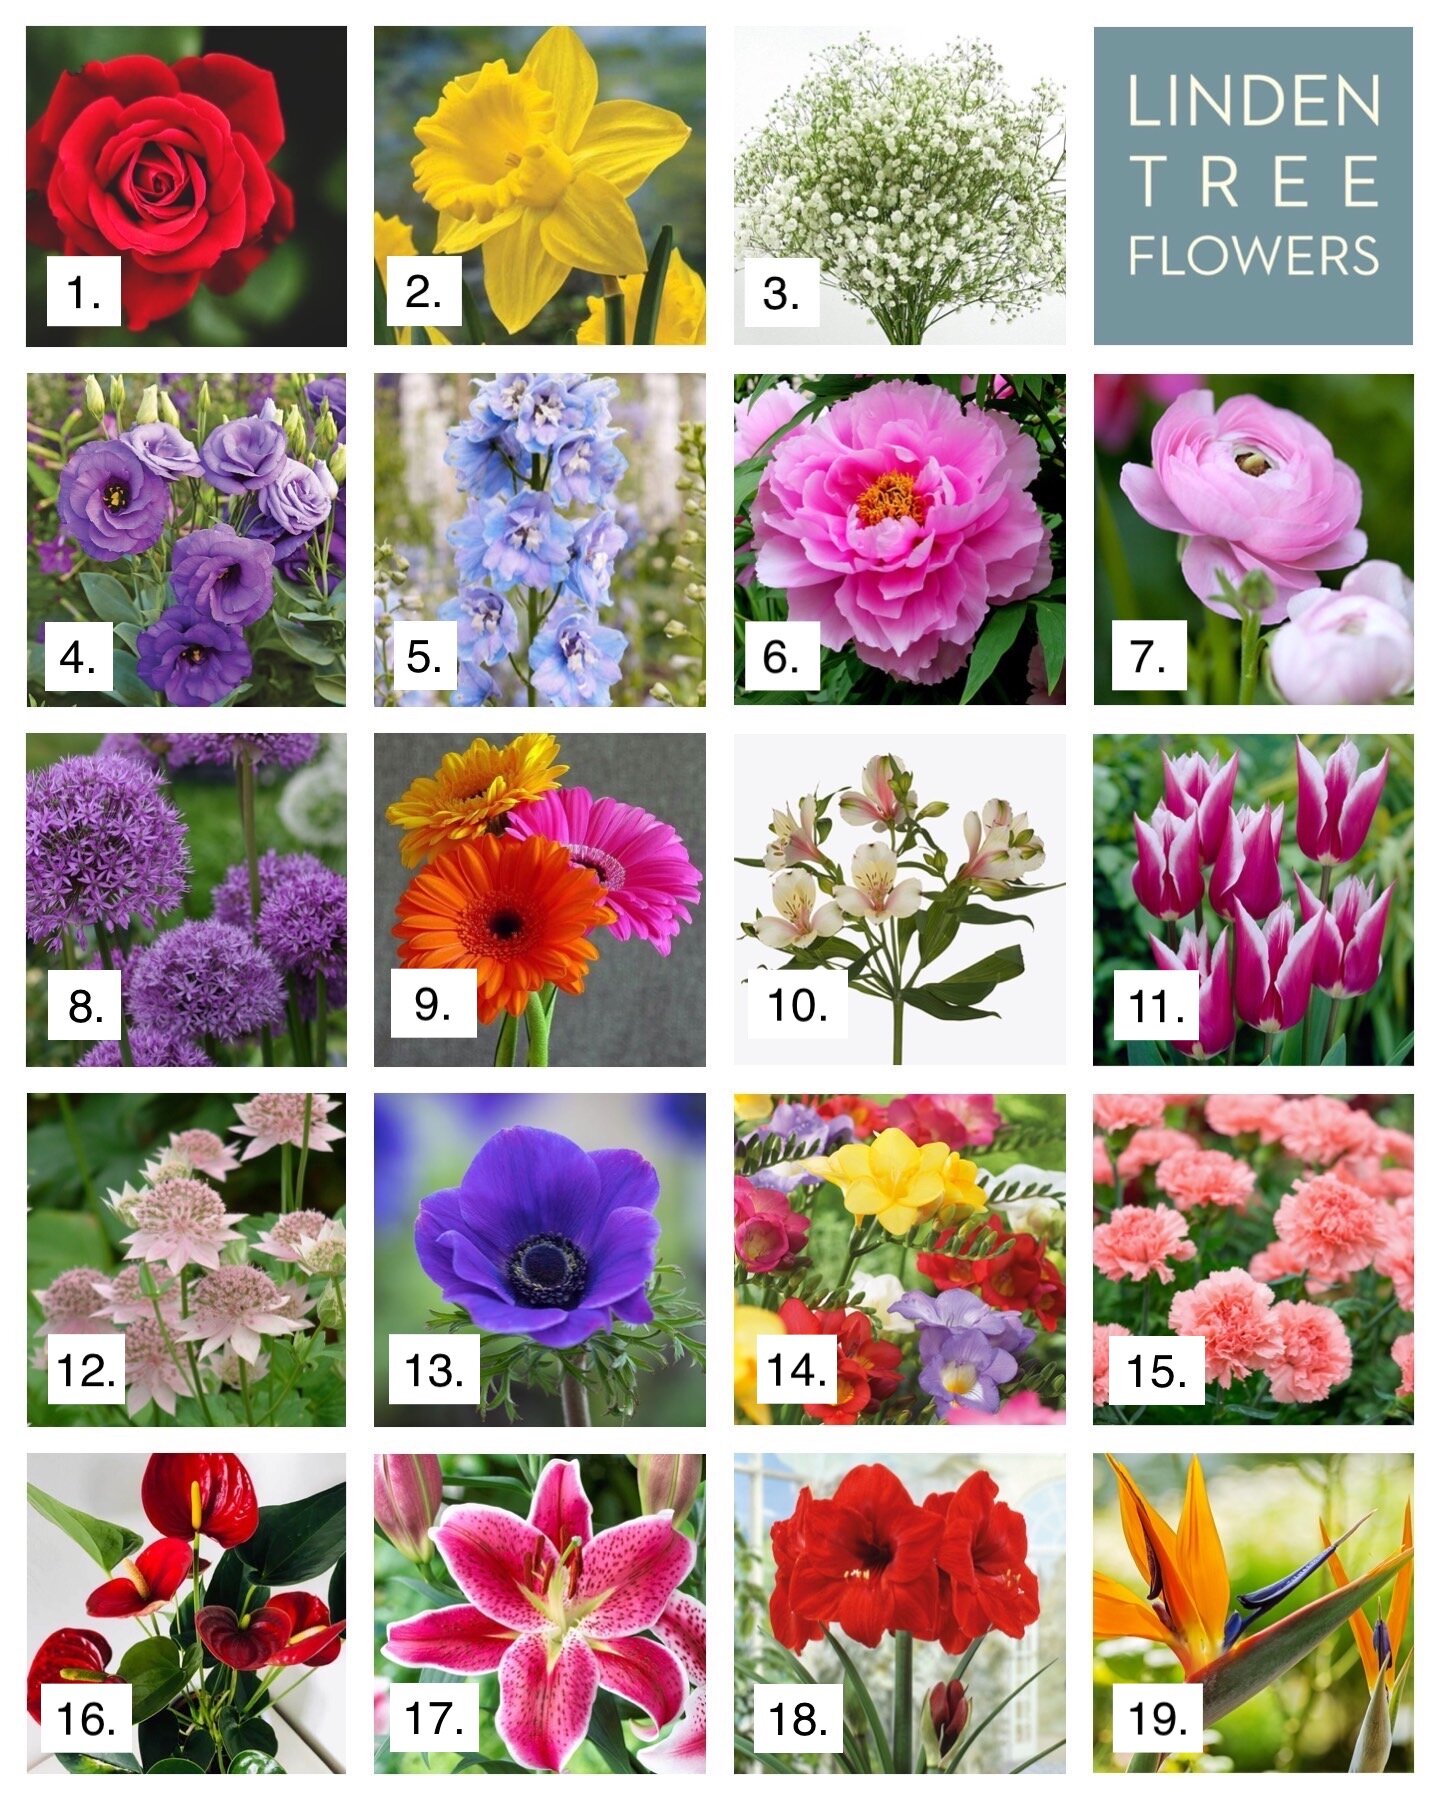 Flower Name Quiz — Linden Tree Flowers